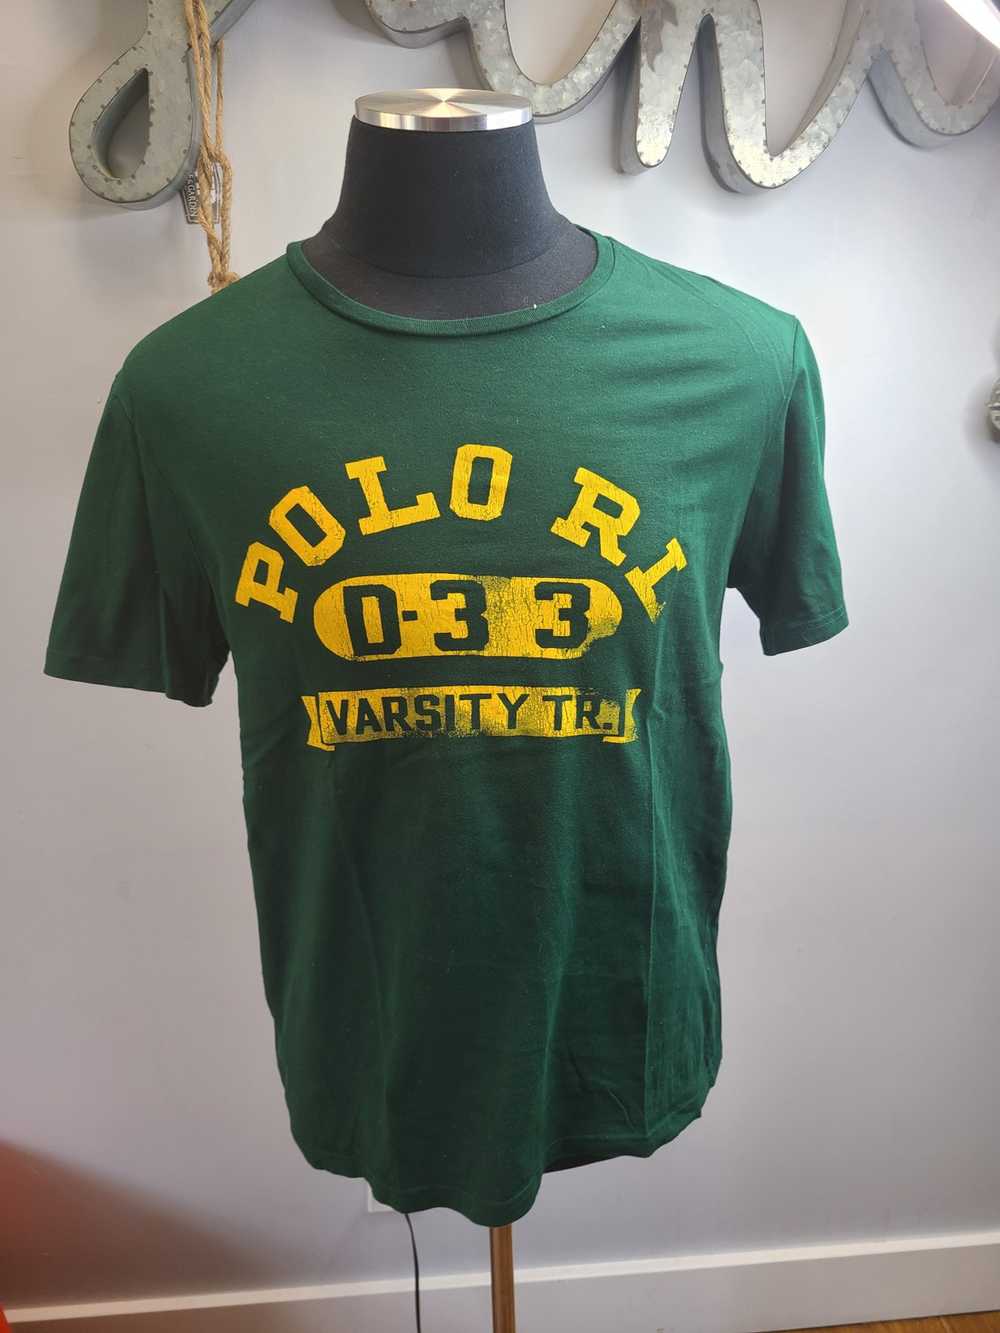 Polo Ralph Lauren Varsity track short sleeve shirt - image 1